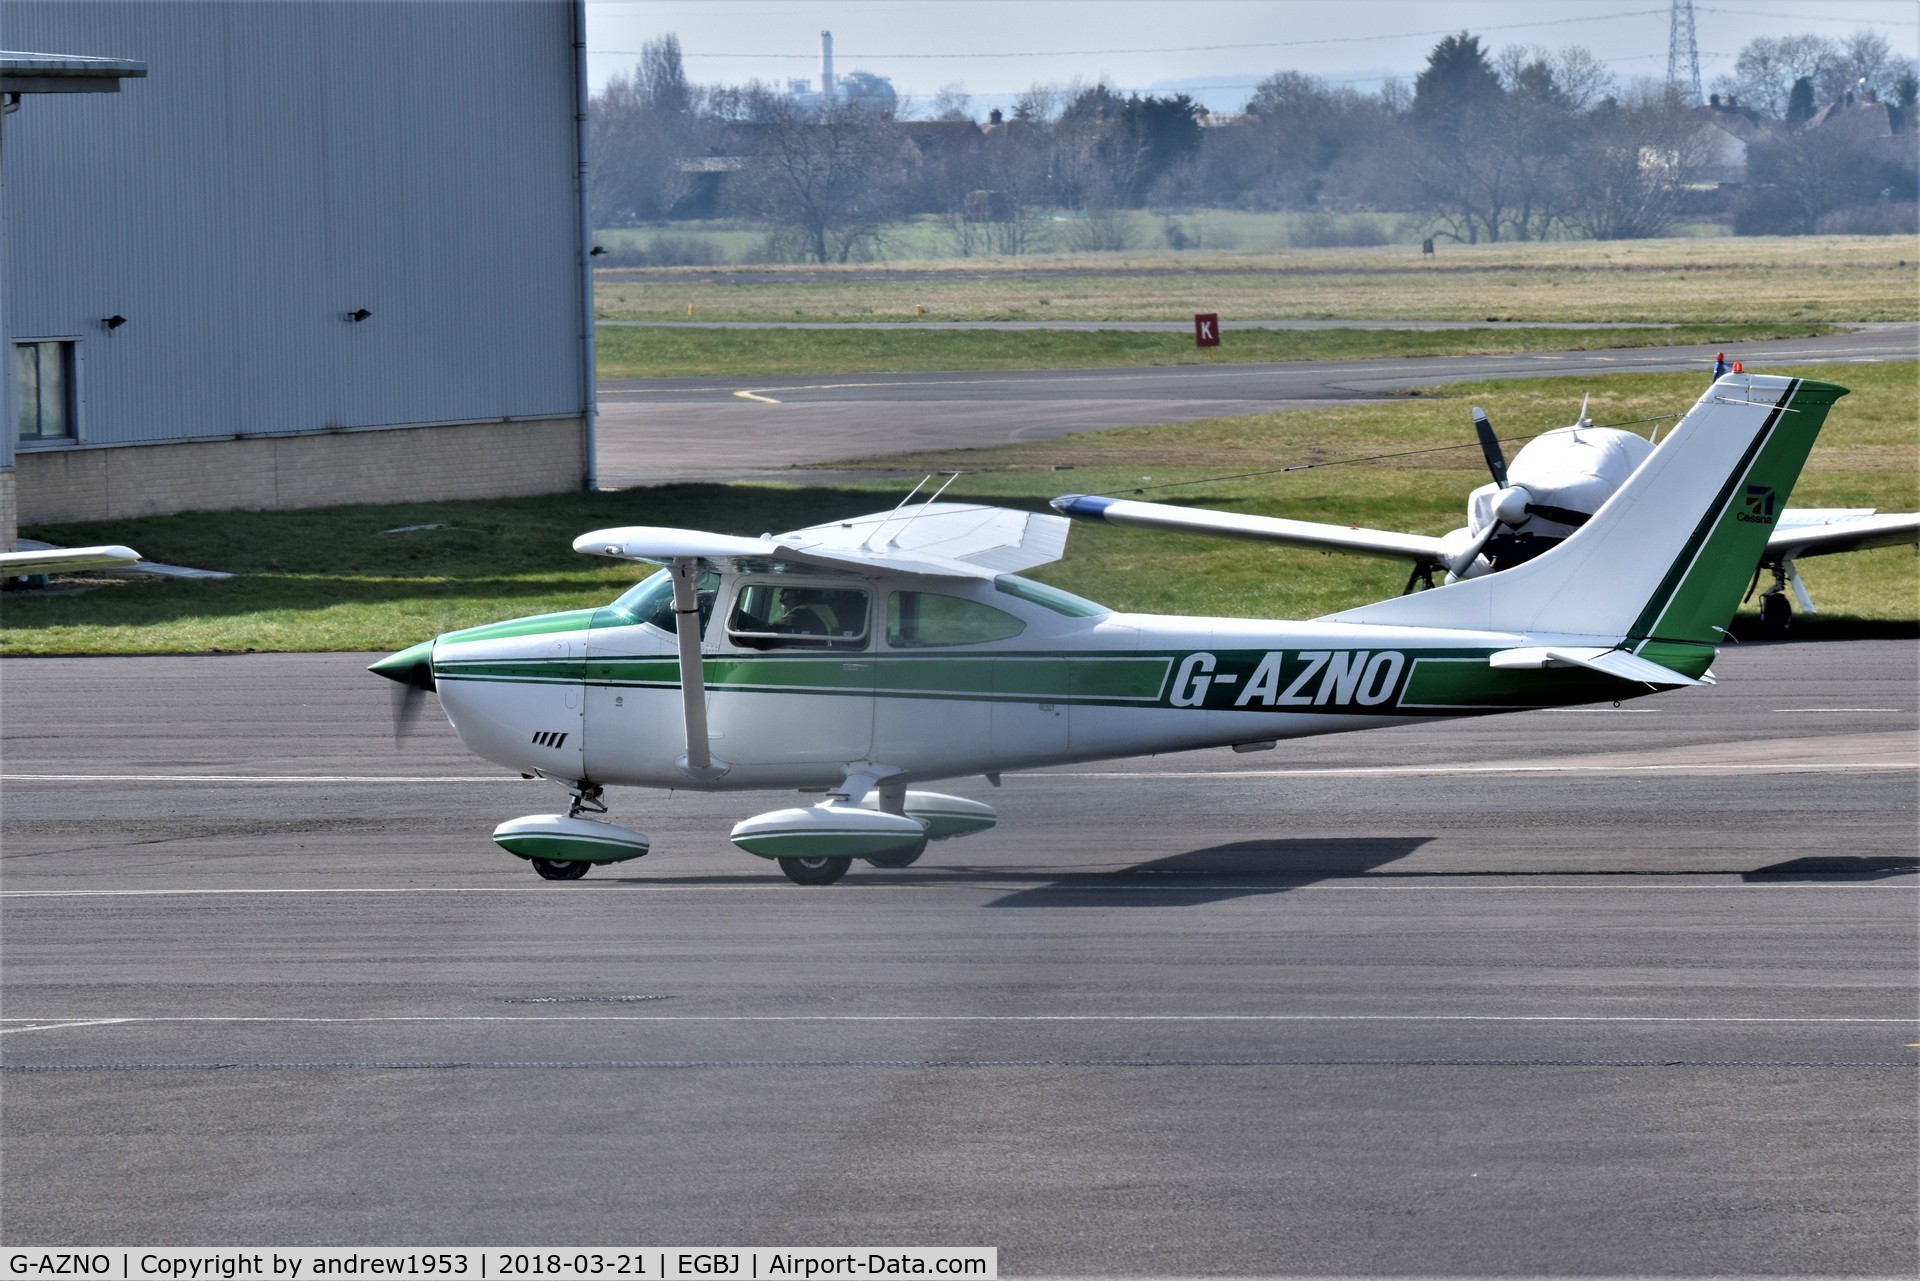 G-AZNO, 1972 Cessna 182P Skylane C/N 182-61005, G-ANZO at Gloucestershire Airport.